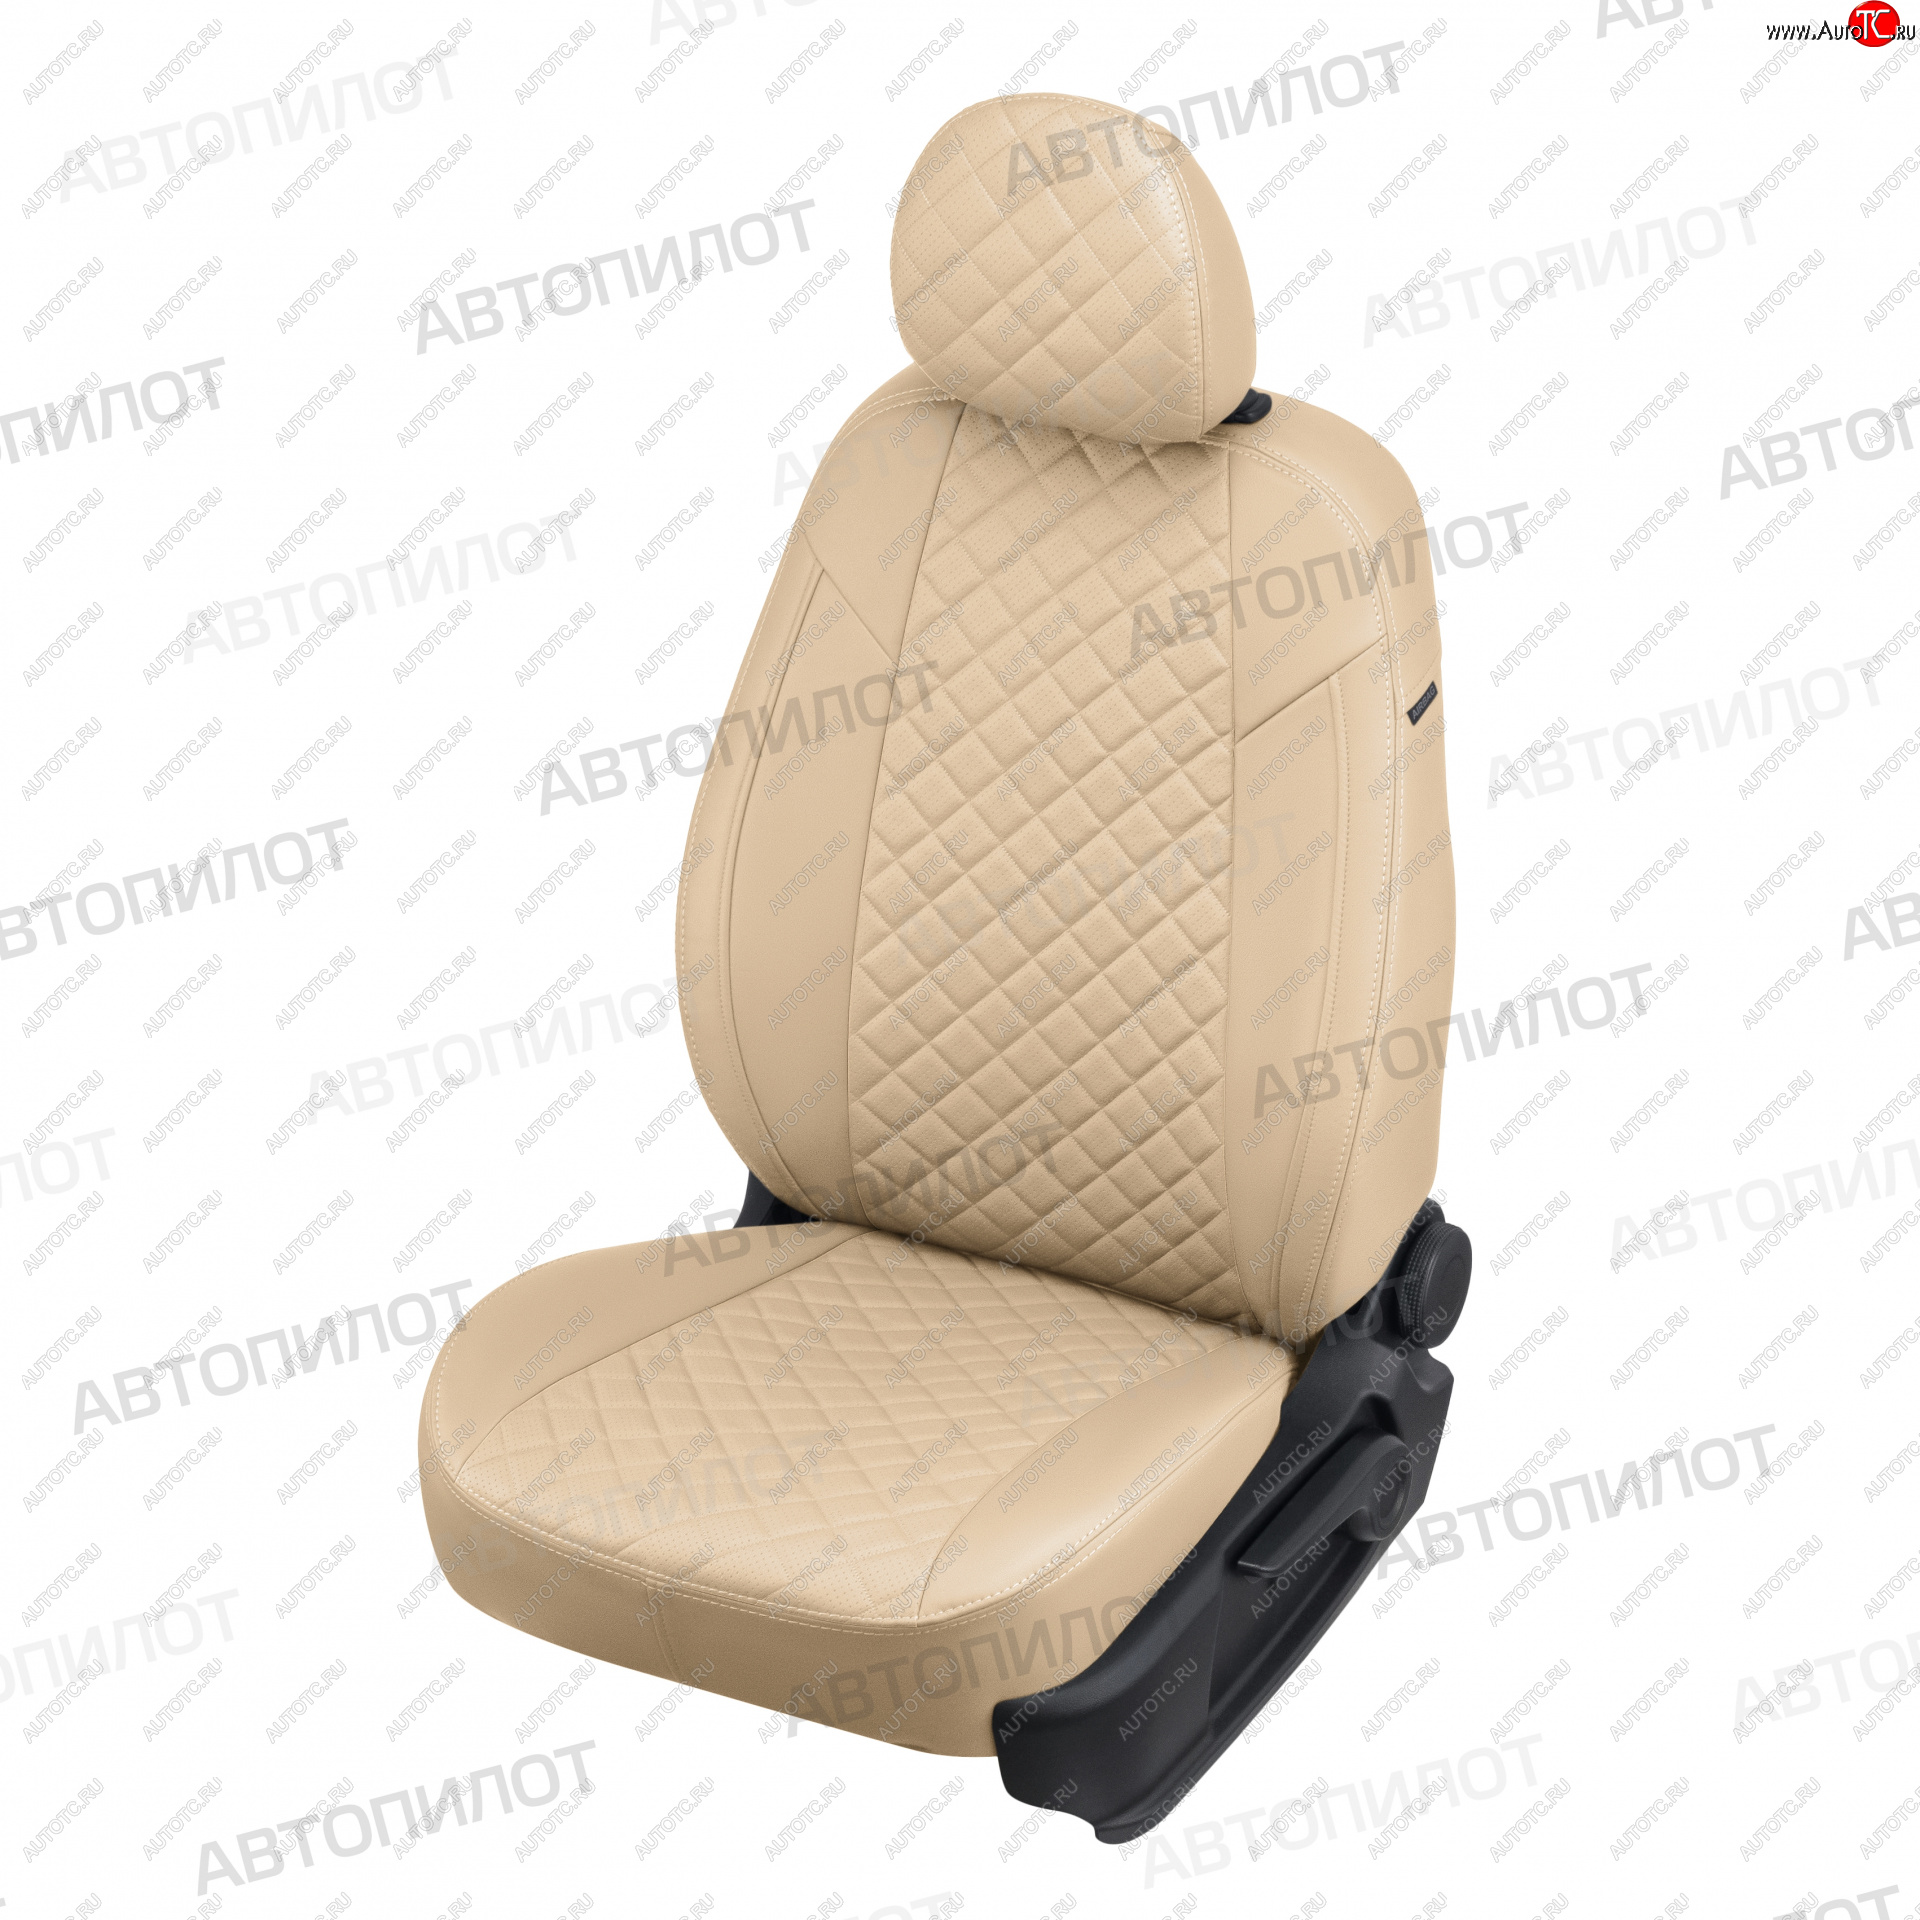 13 999 р. Чехлы сидений (экокожа) Автопилот Ромб  Hyundai Sonata  NF (2004-2010) (бежевый)